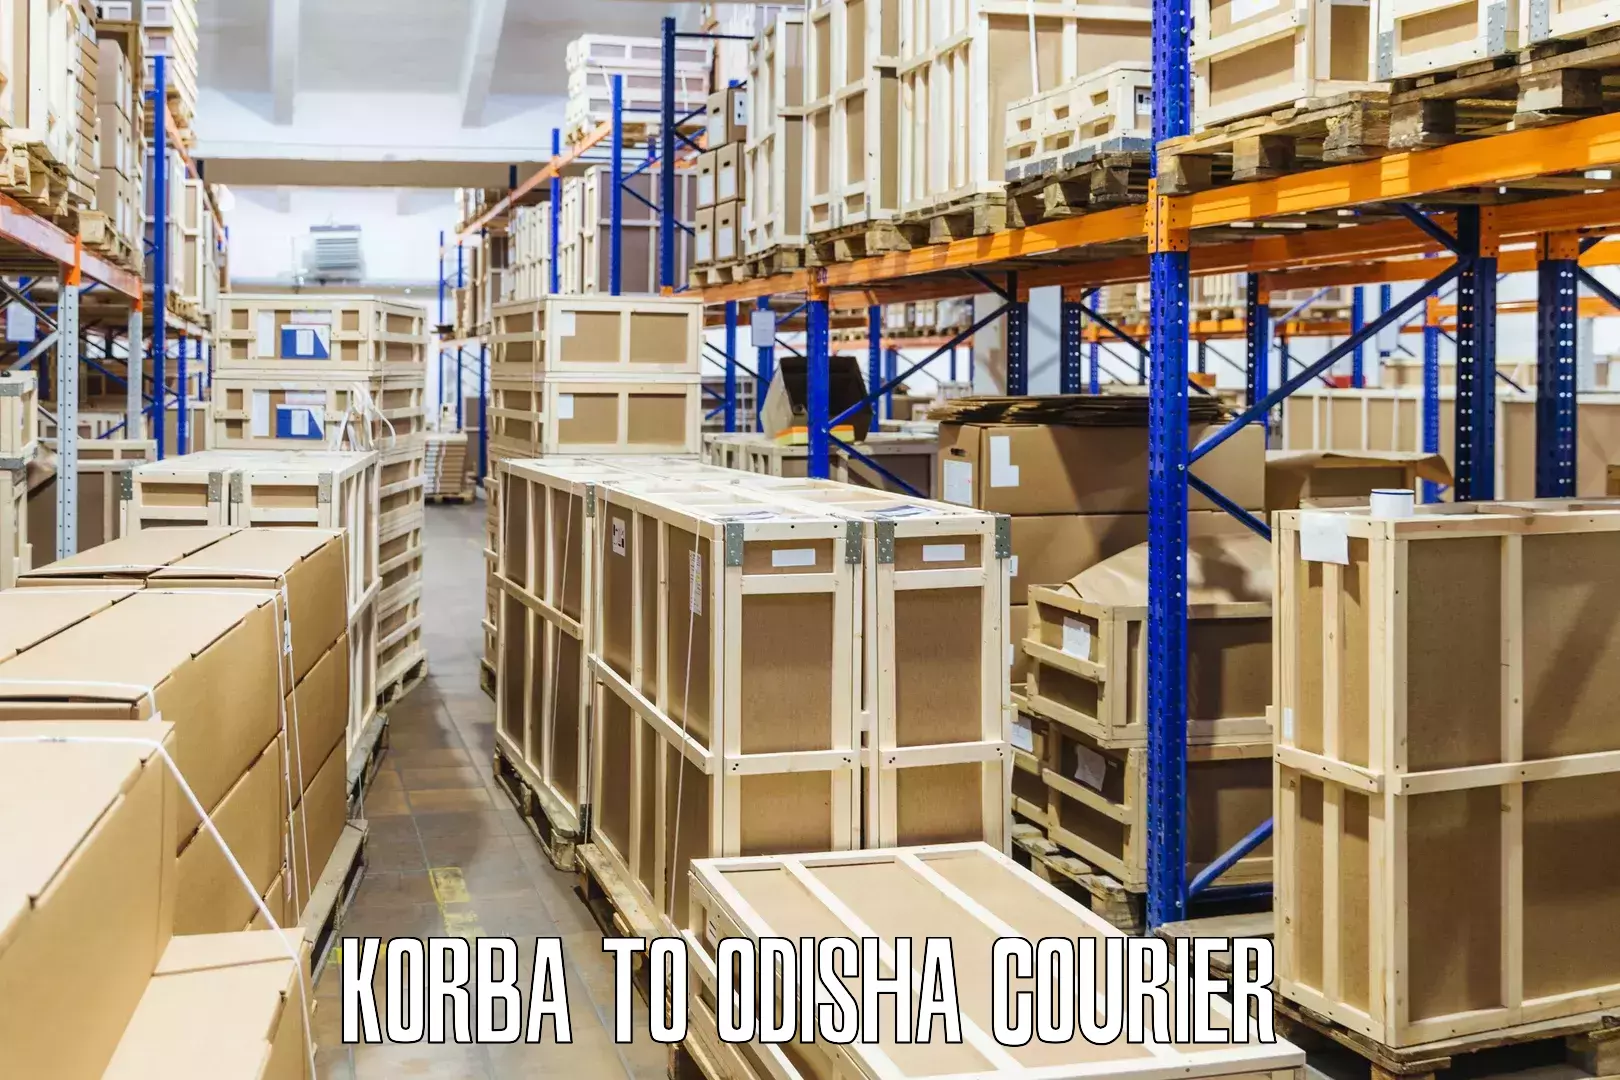 On-call courier service Korba to Balasore